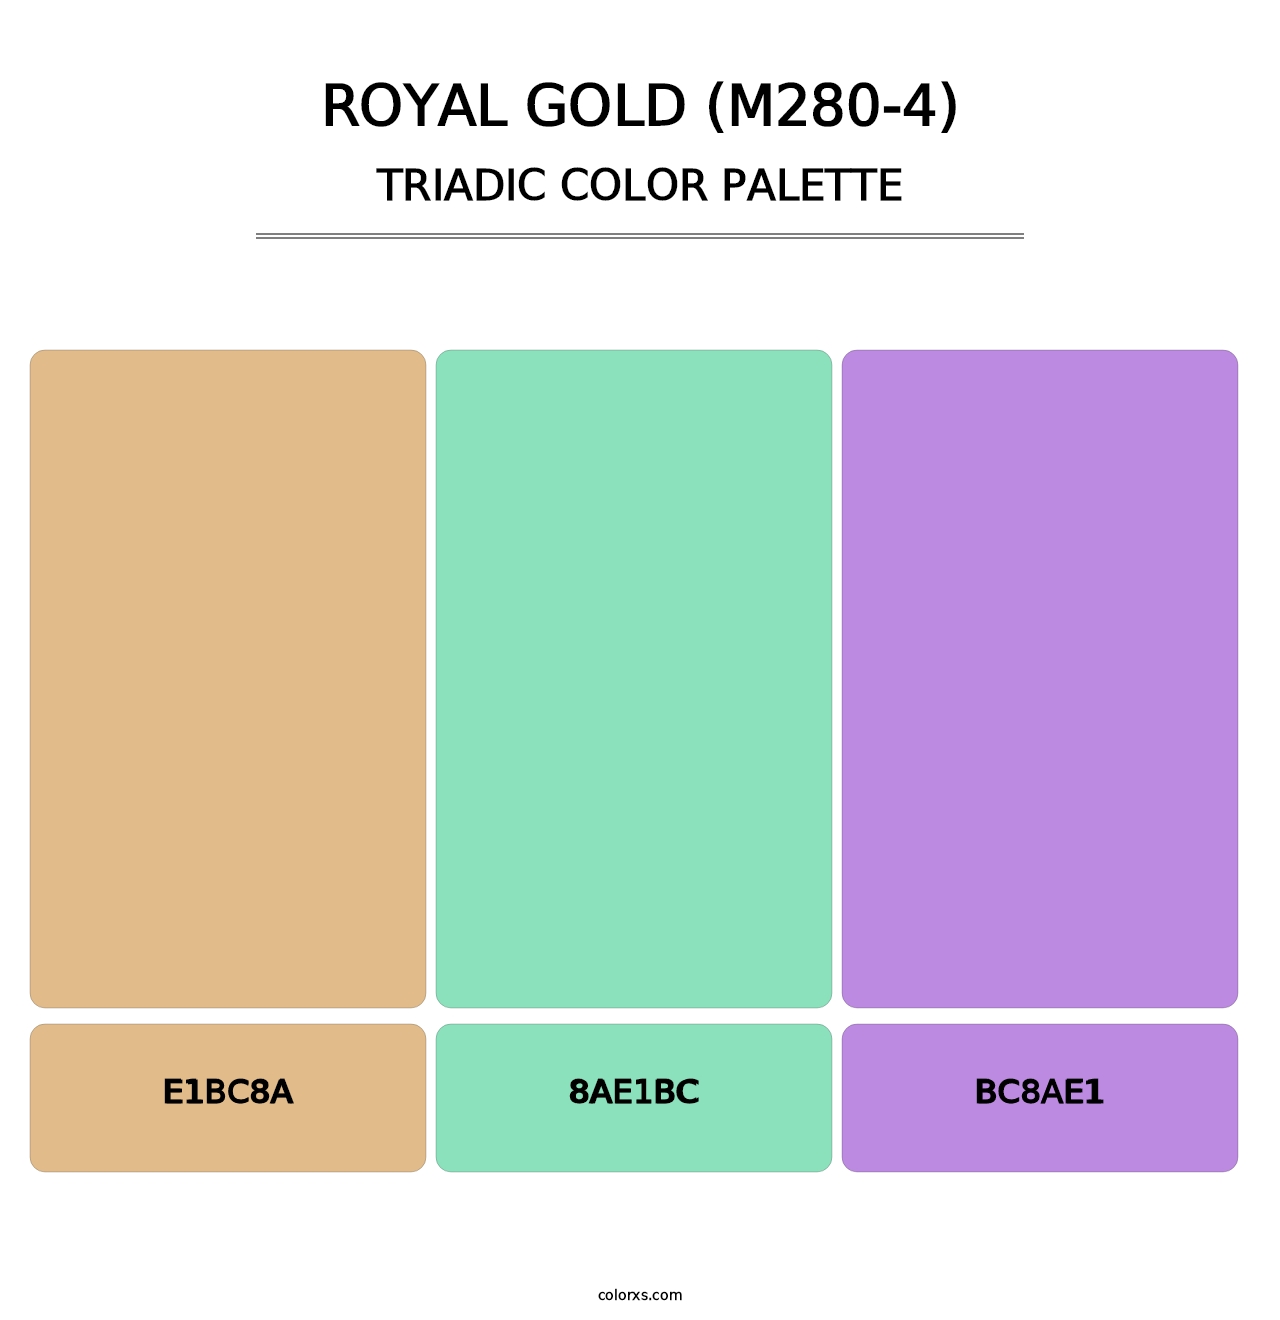 Royal Gold (M280-4) - Triadic Color Palette